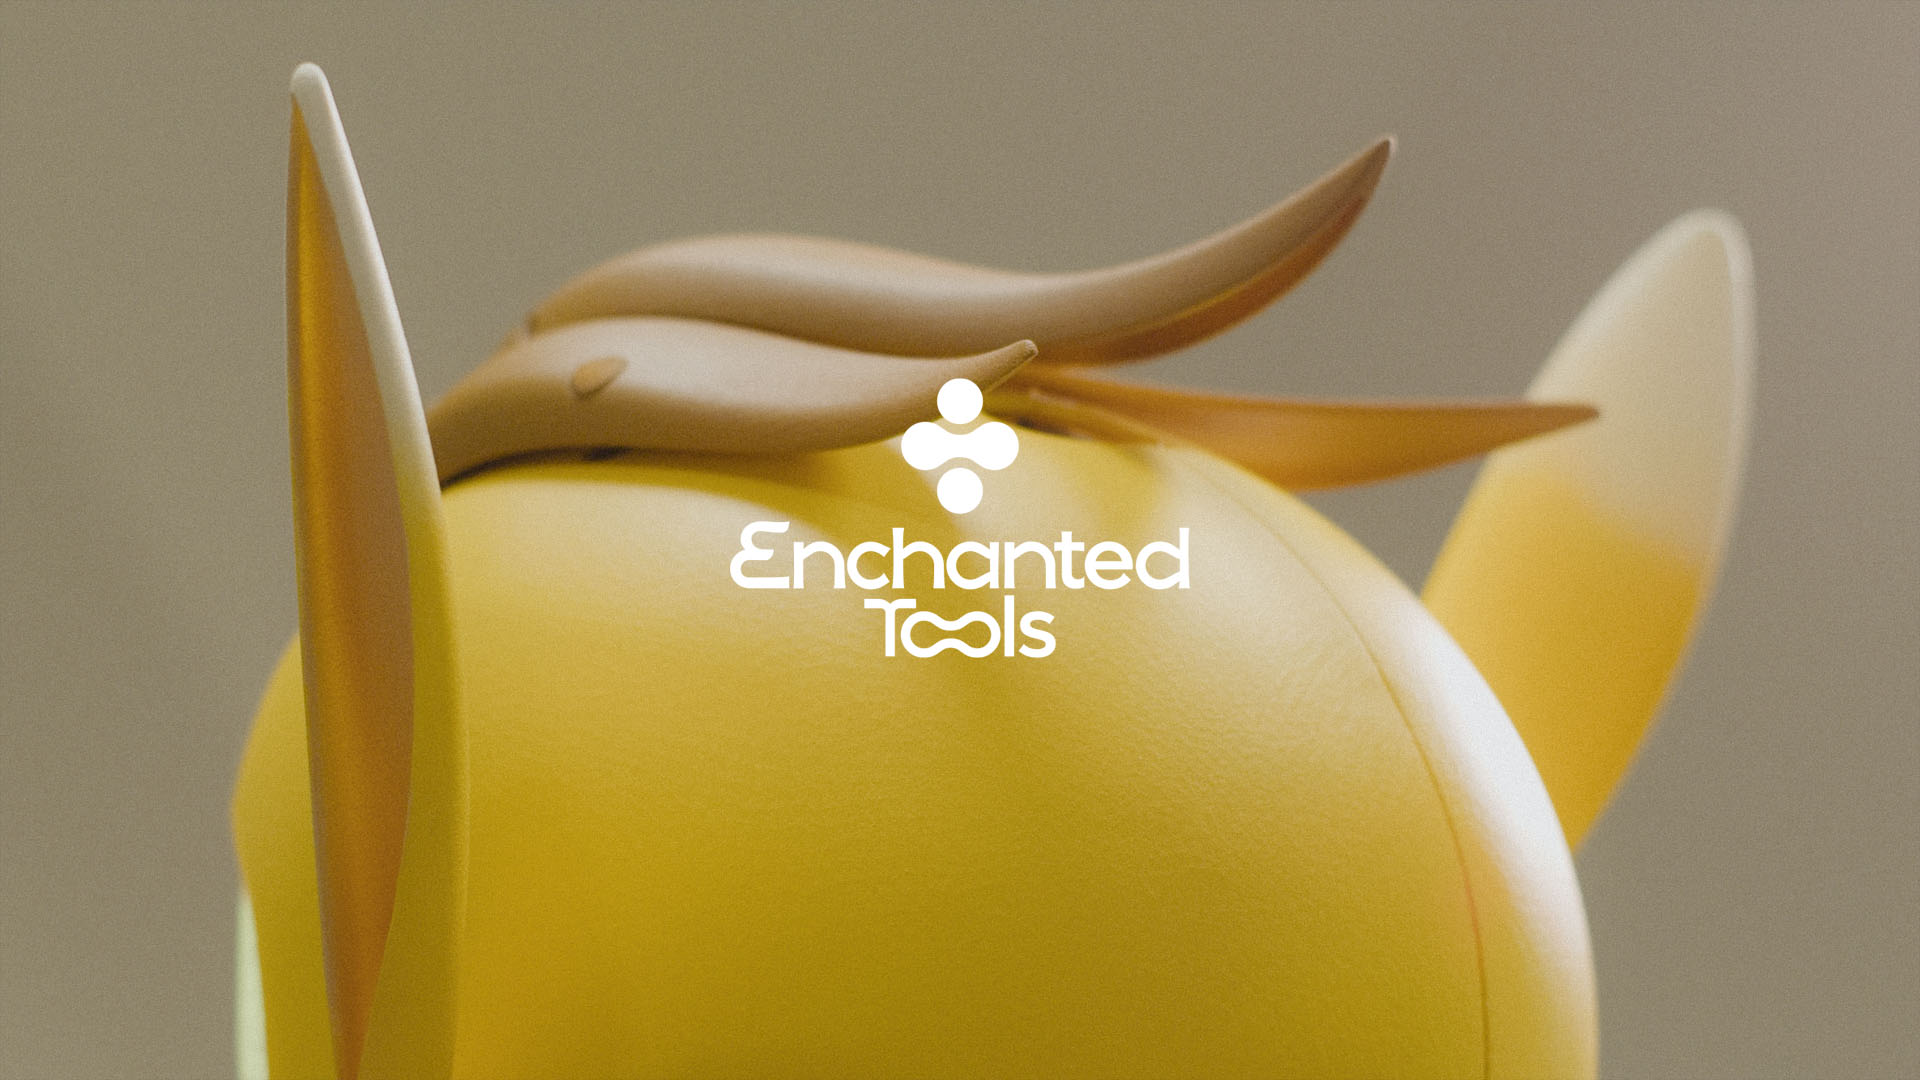 enchanted tools maison maj identité visuelle creation de logo photo2